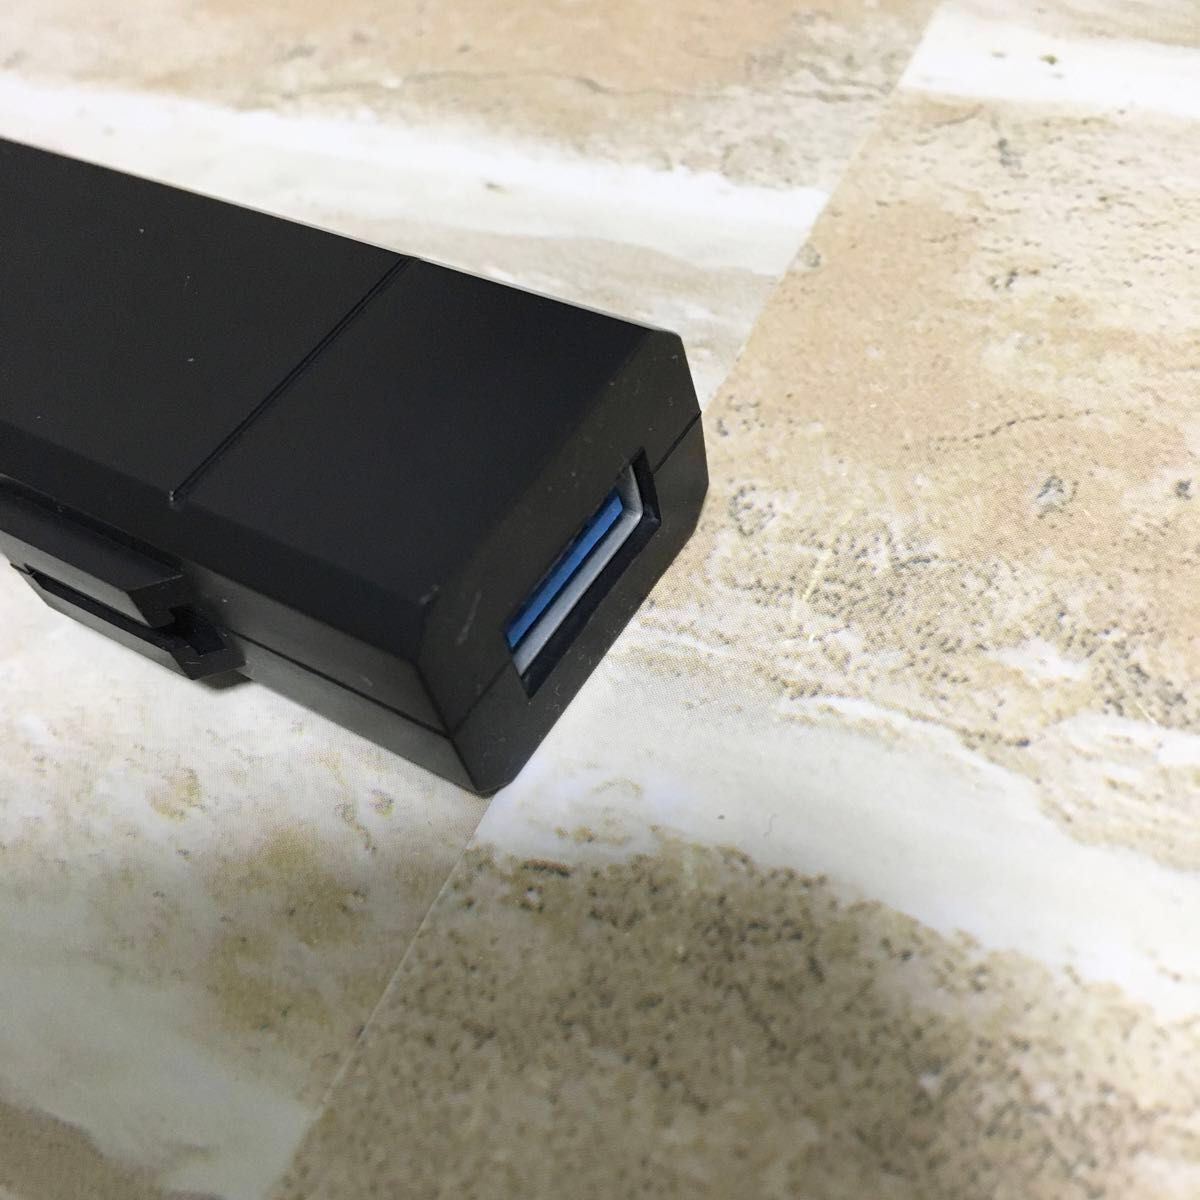 USBハブ 増設 USBポート 4口 4ポート 黒 ブラック サンワサプライ 動作確認済み